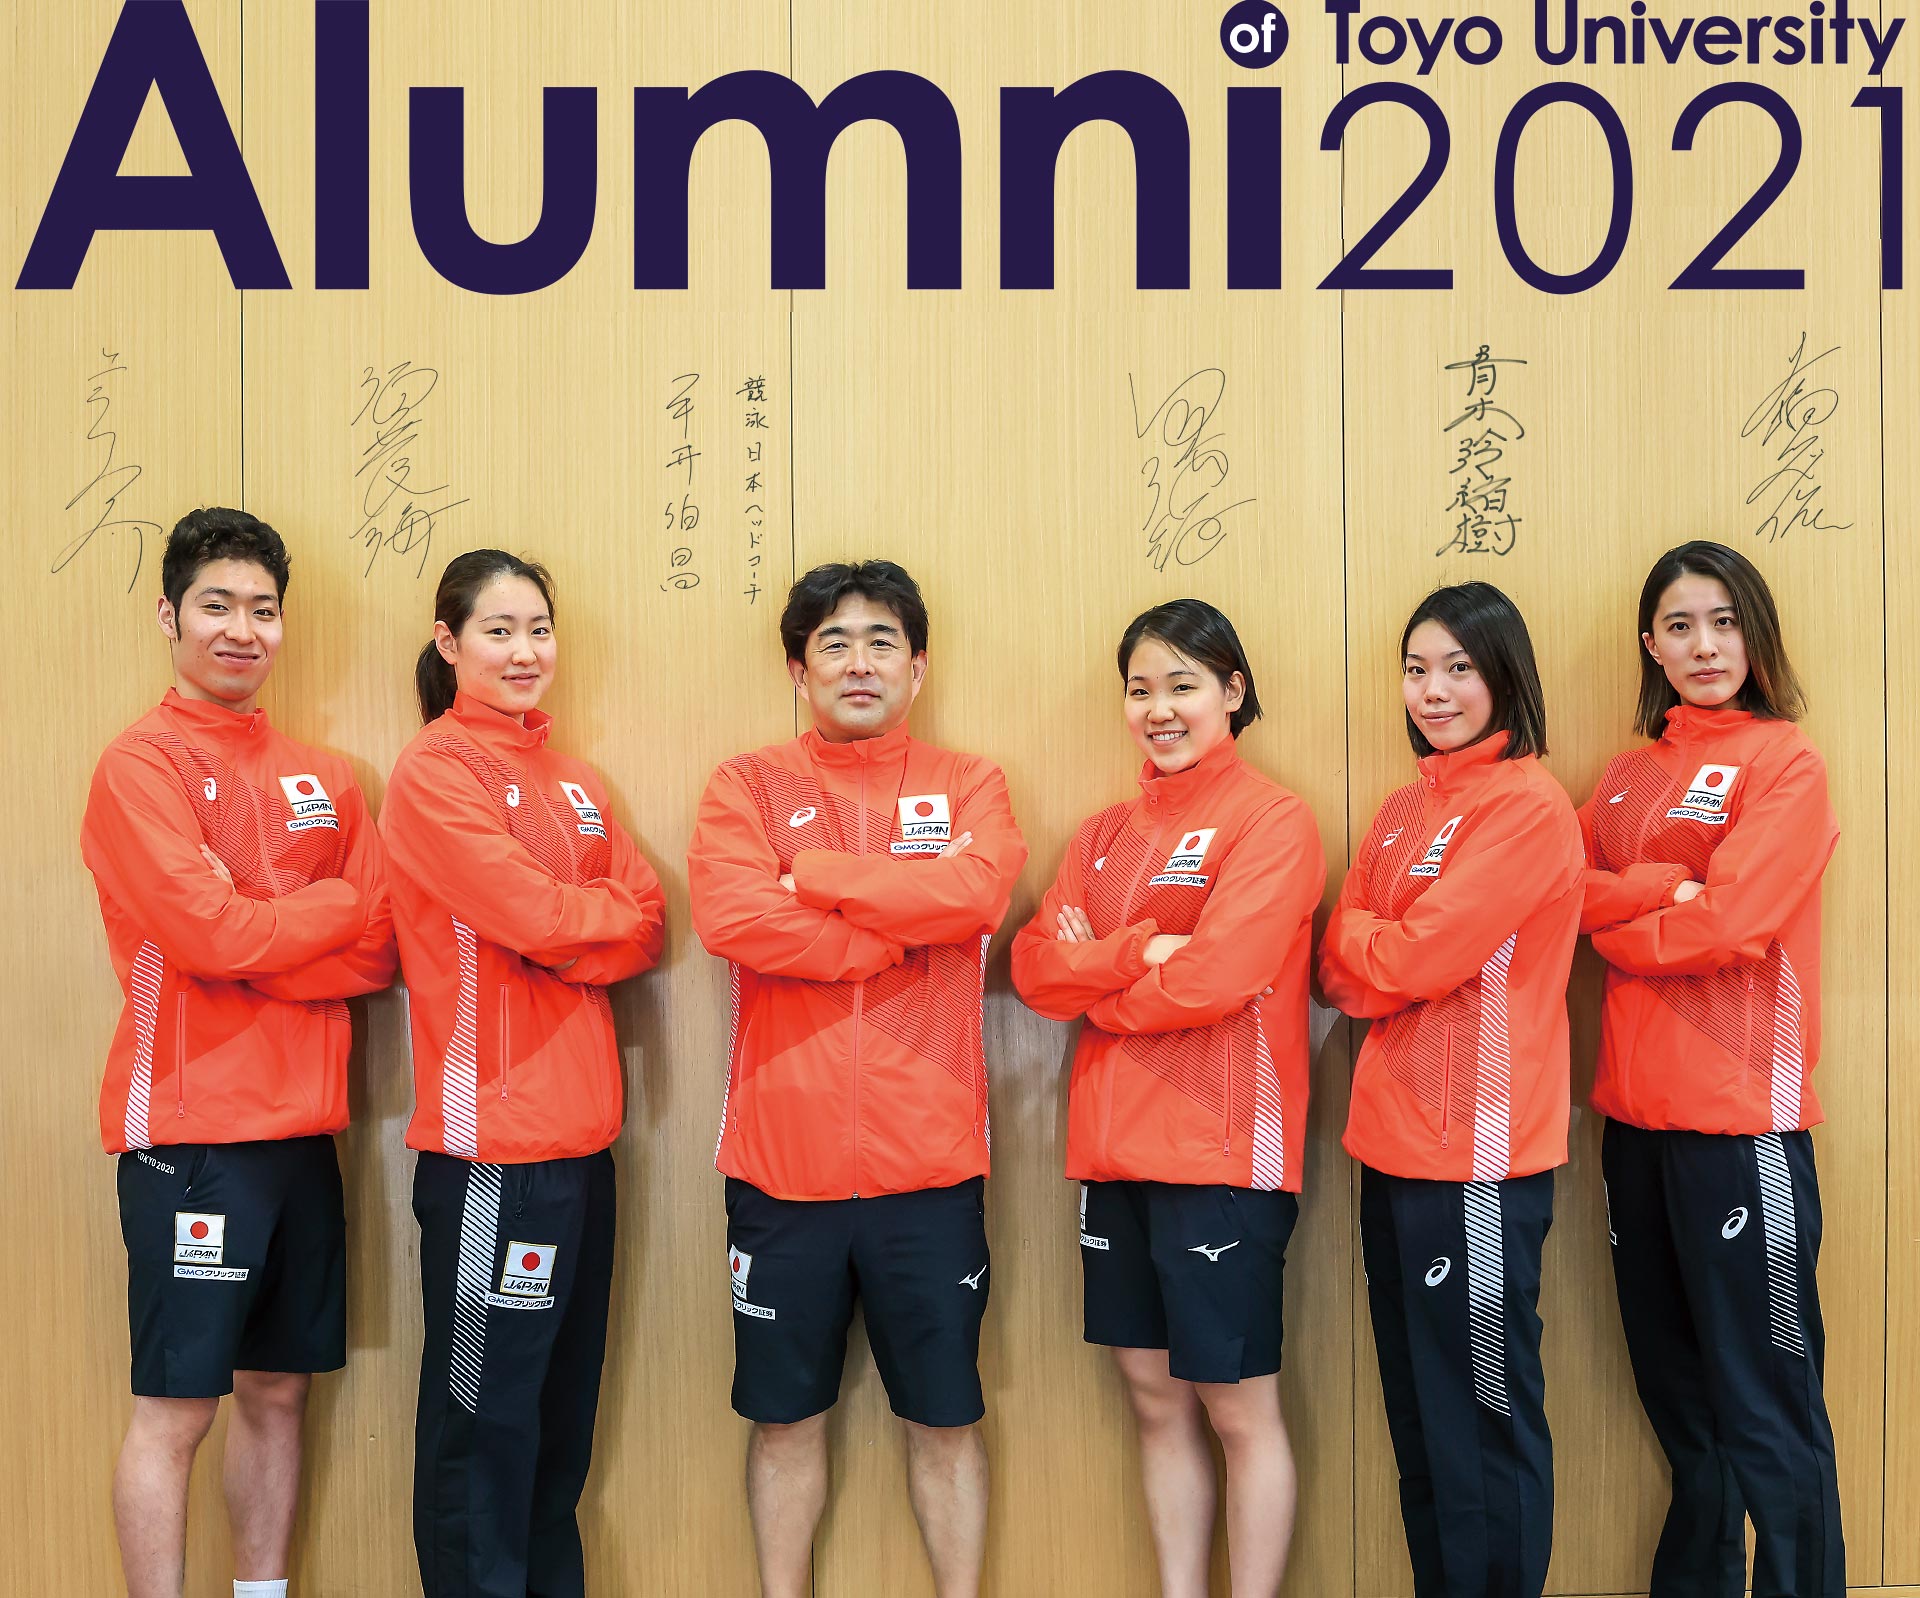 Alumni 2021 of Toyo University